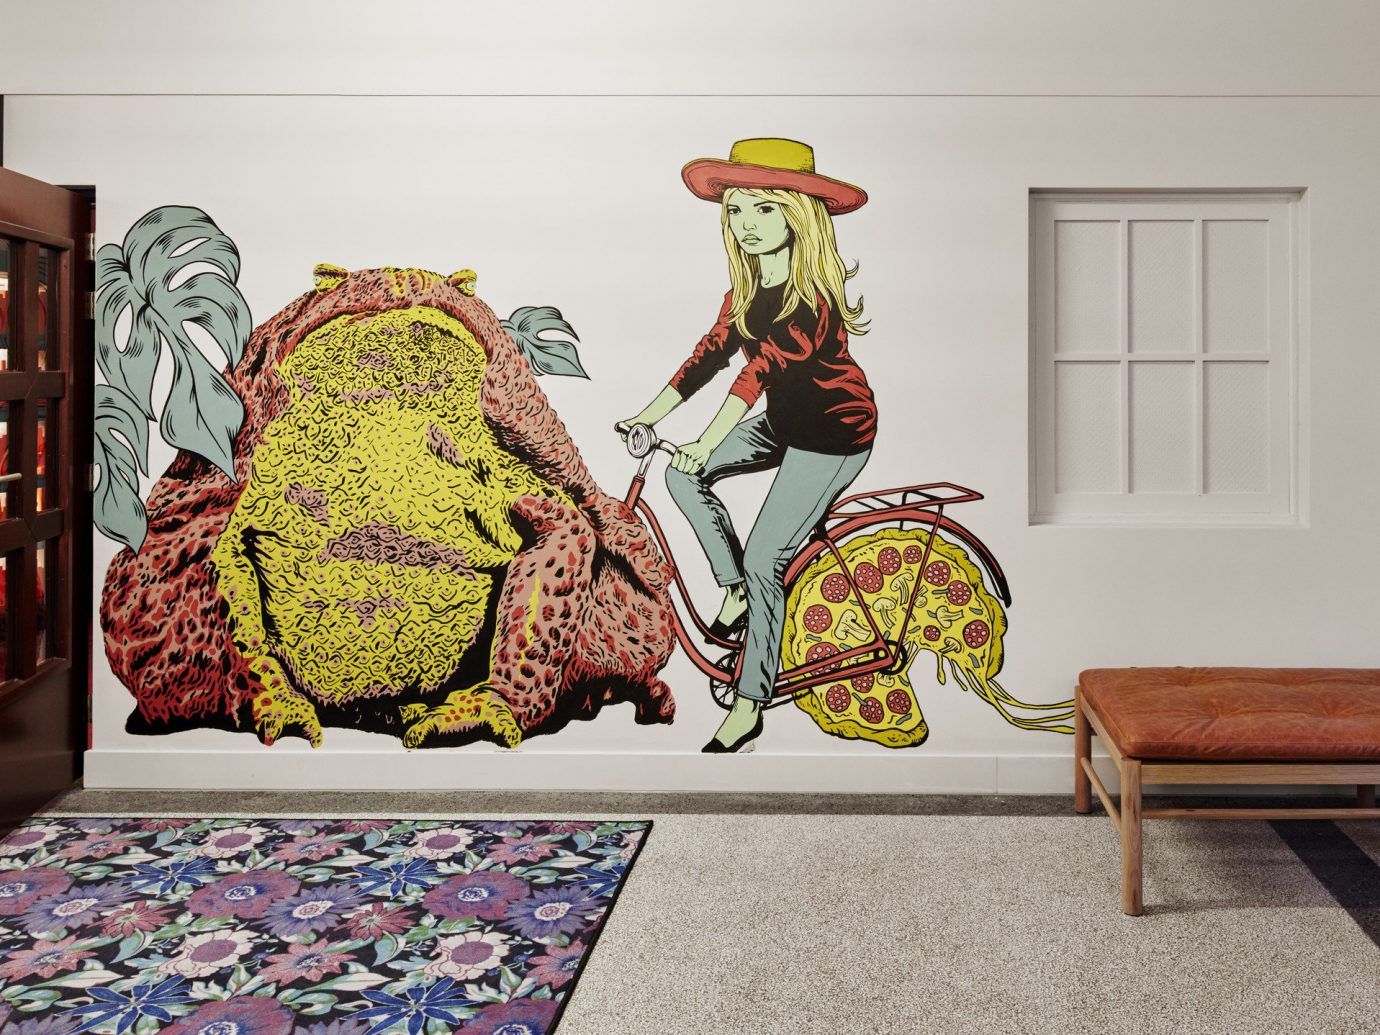 Hotels indoor floor Living art painting modern art mural furniture Design illustration textile